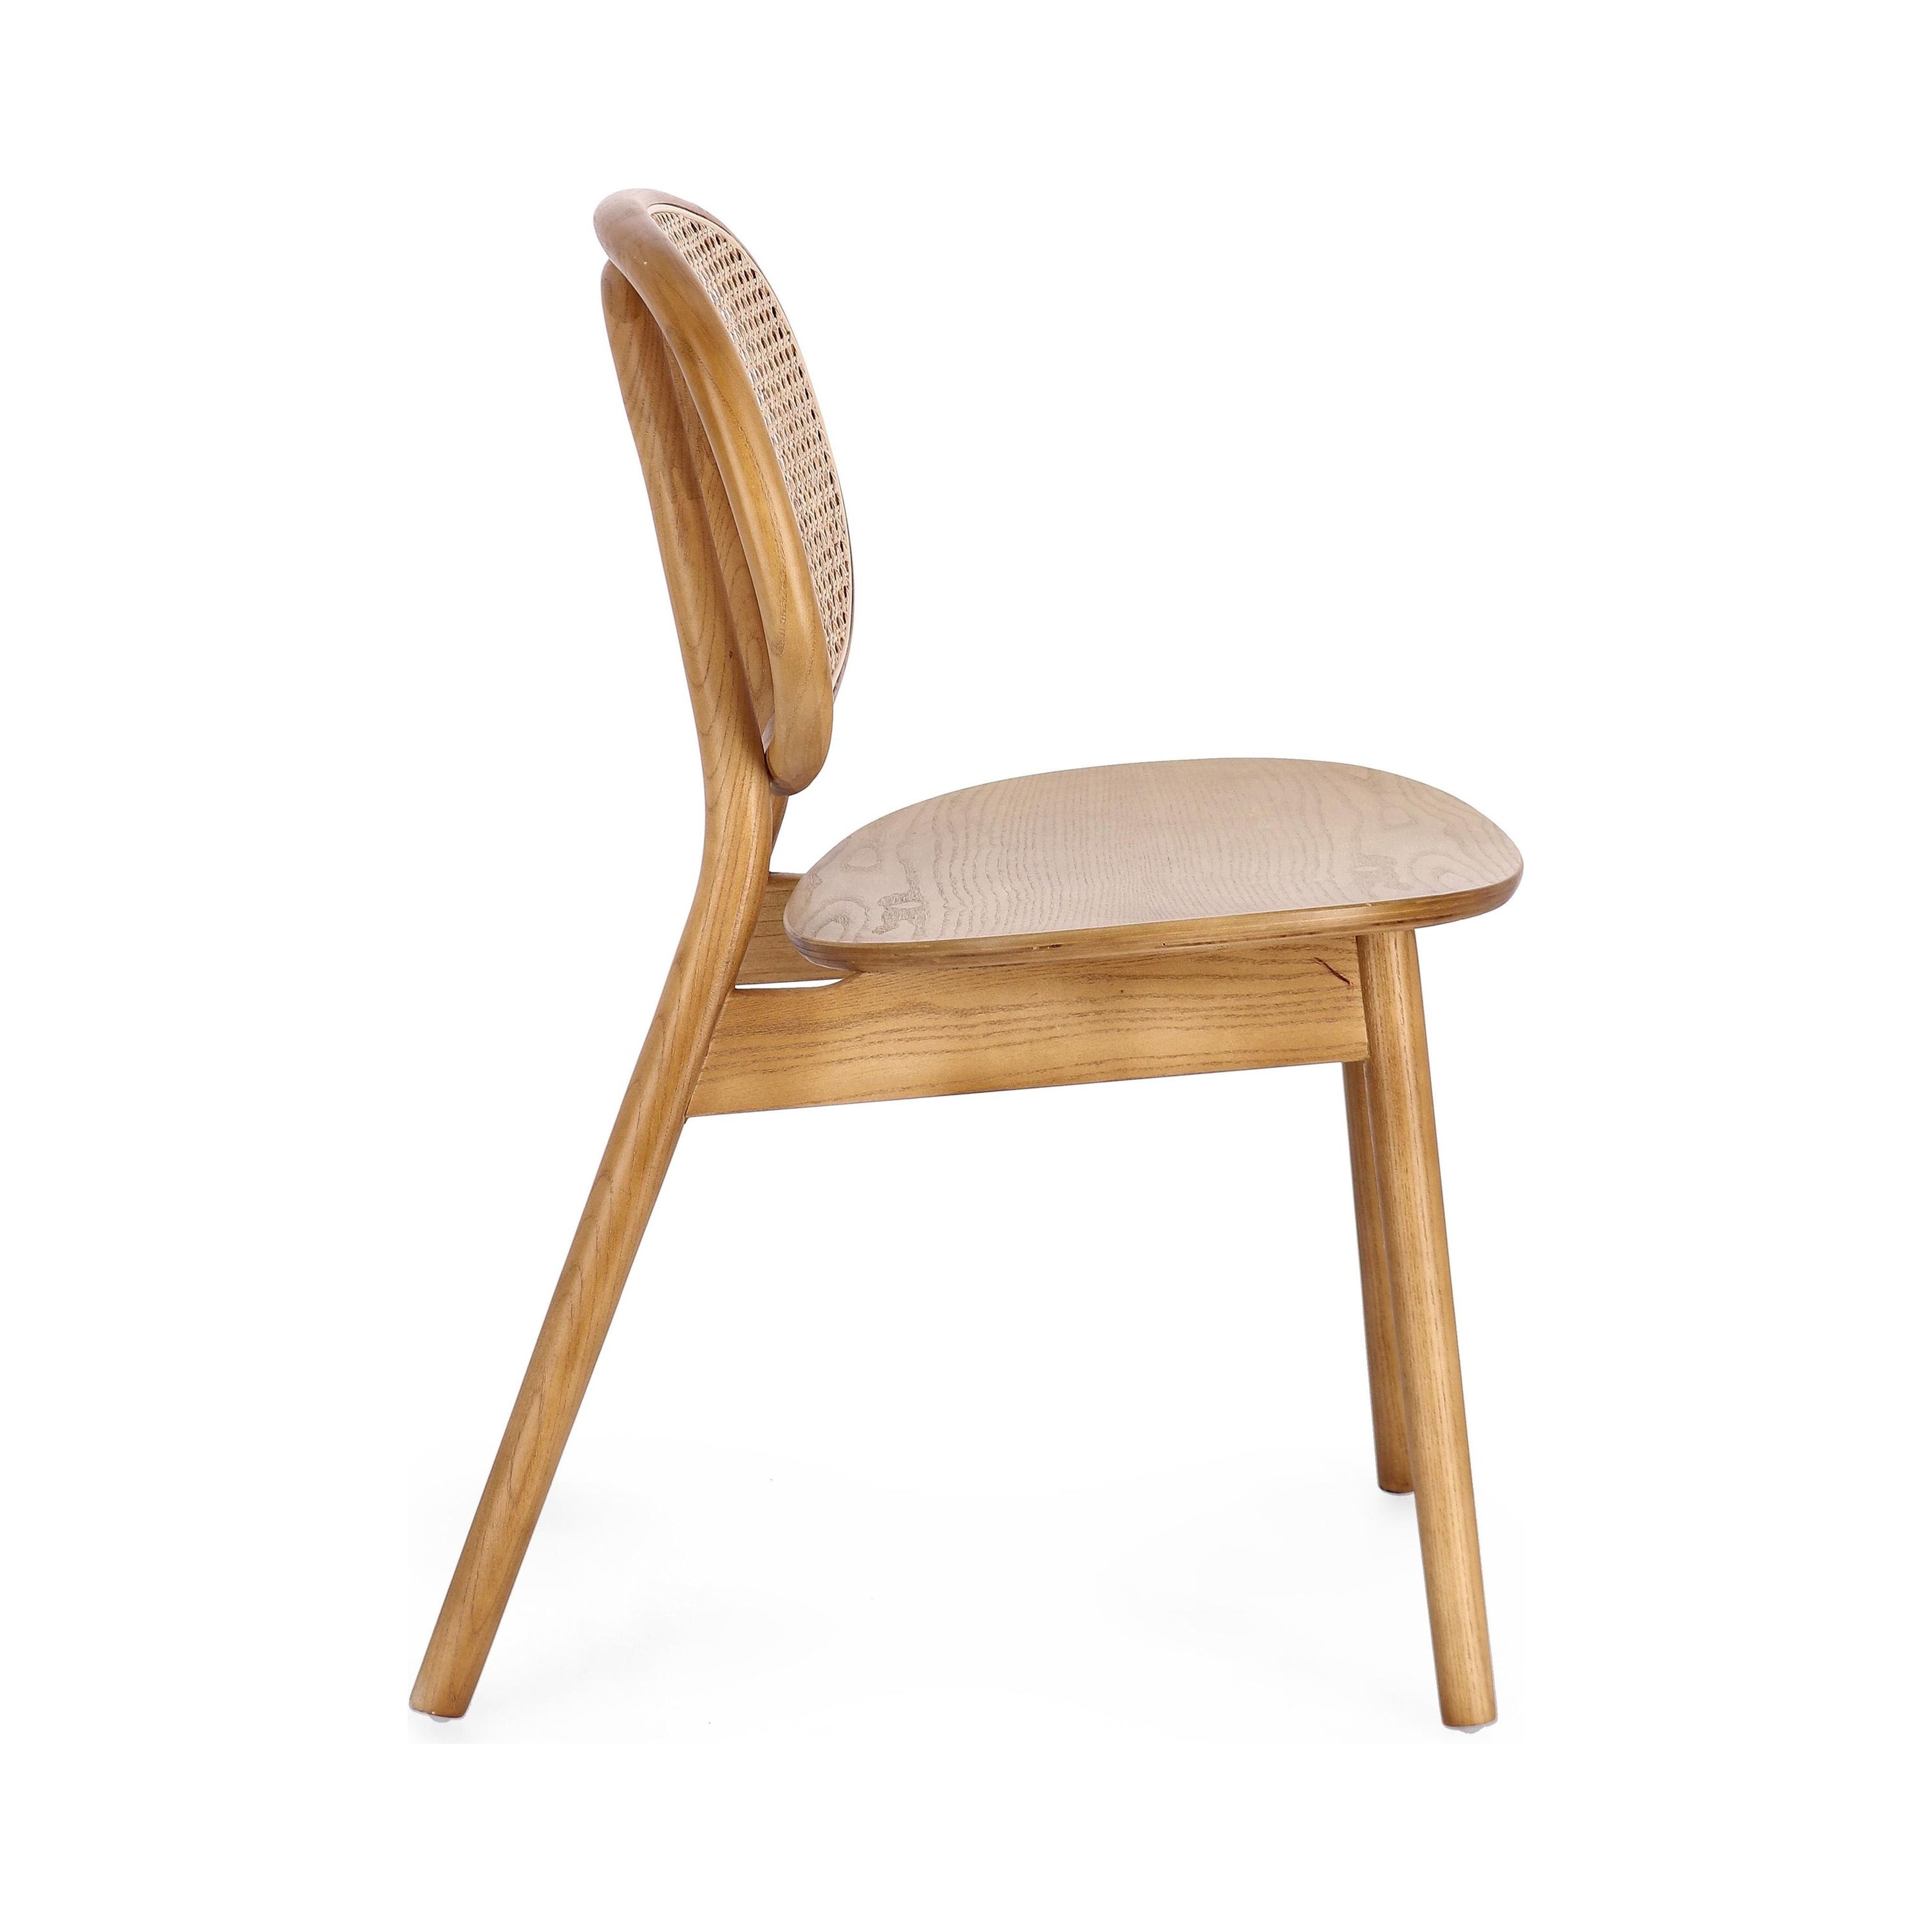 ADOLIS kėdė, natūrali spalva